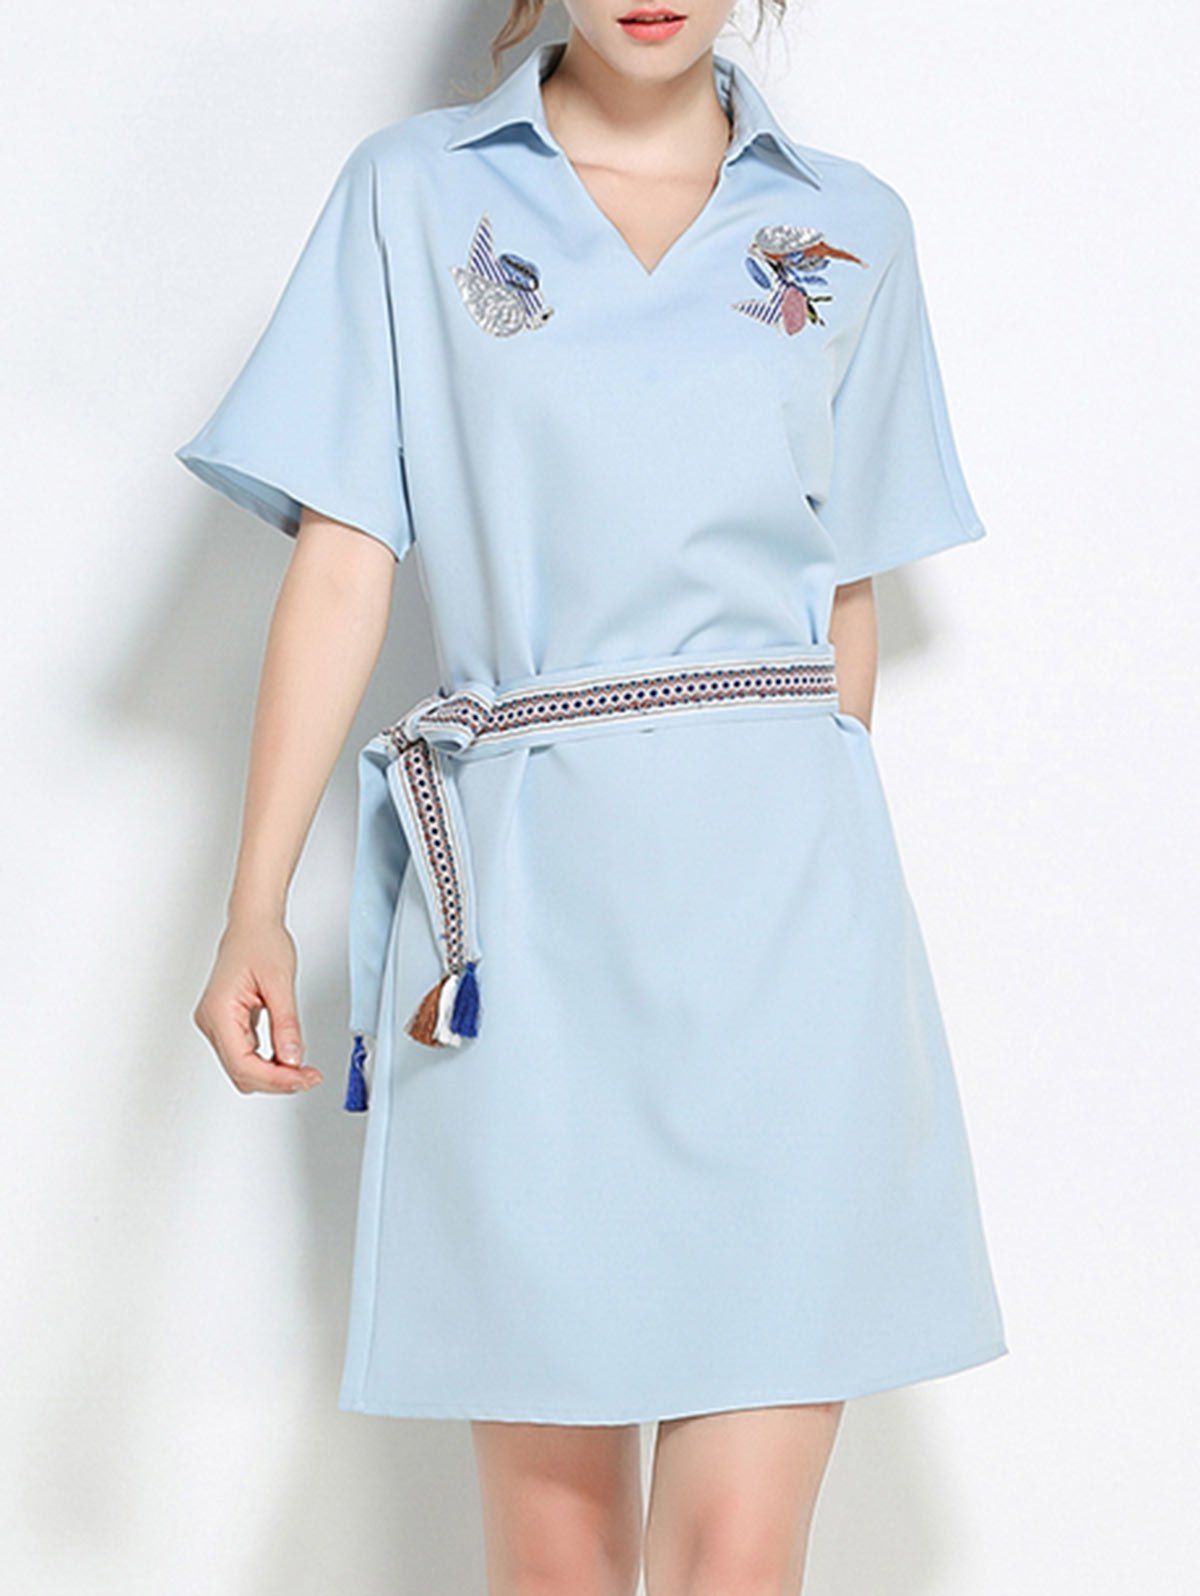 Batwing Sleeve Embroidery Sequins Belted Shirt Dress - LIGHT BLUE XL